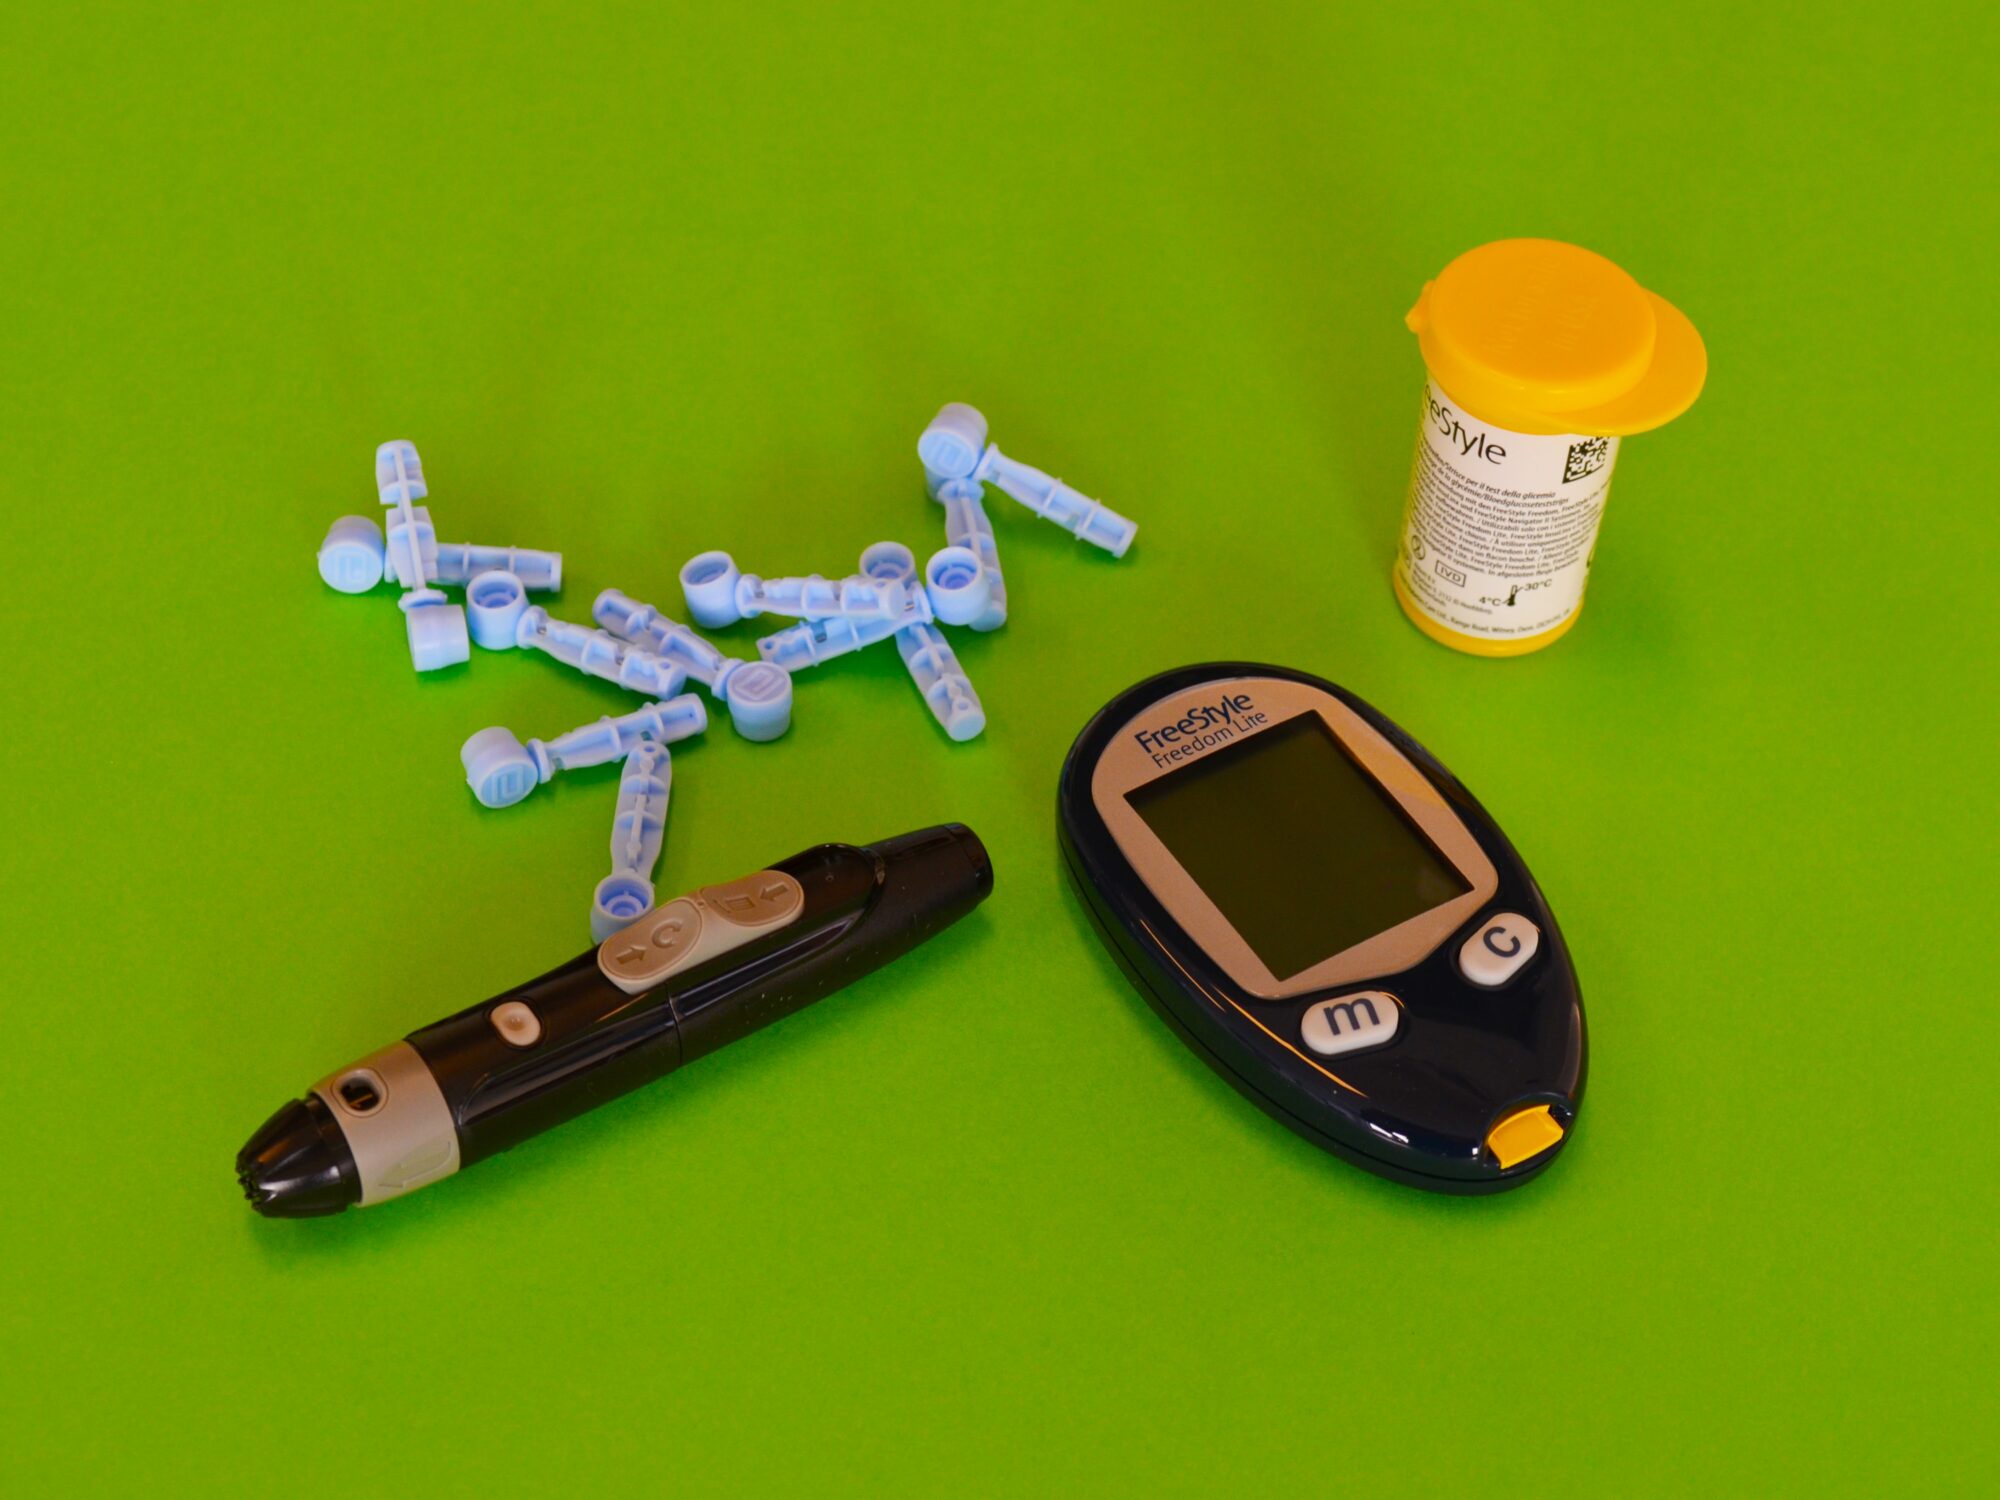 tools to measure blood pressure